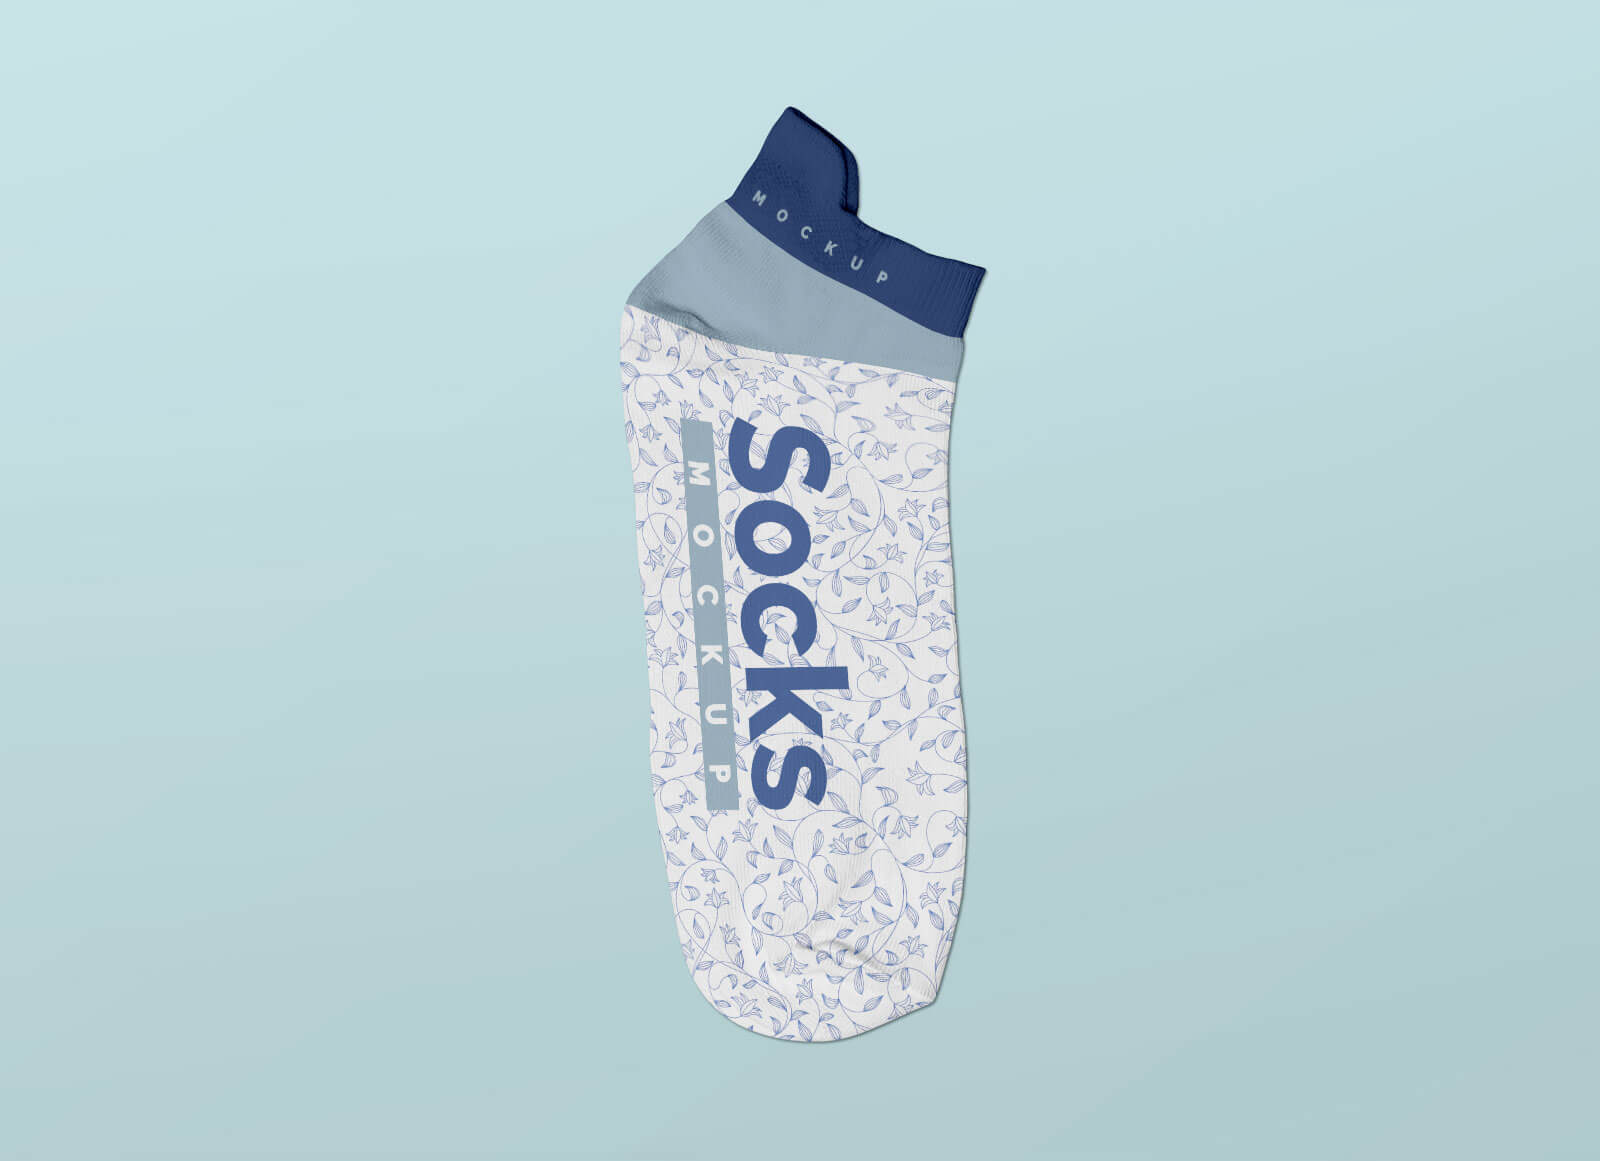 Free Low Cut Ankle Socks Mockup PSD Set